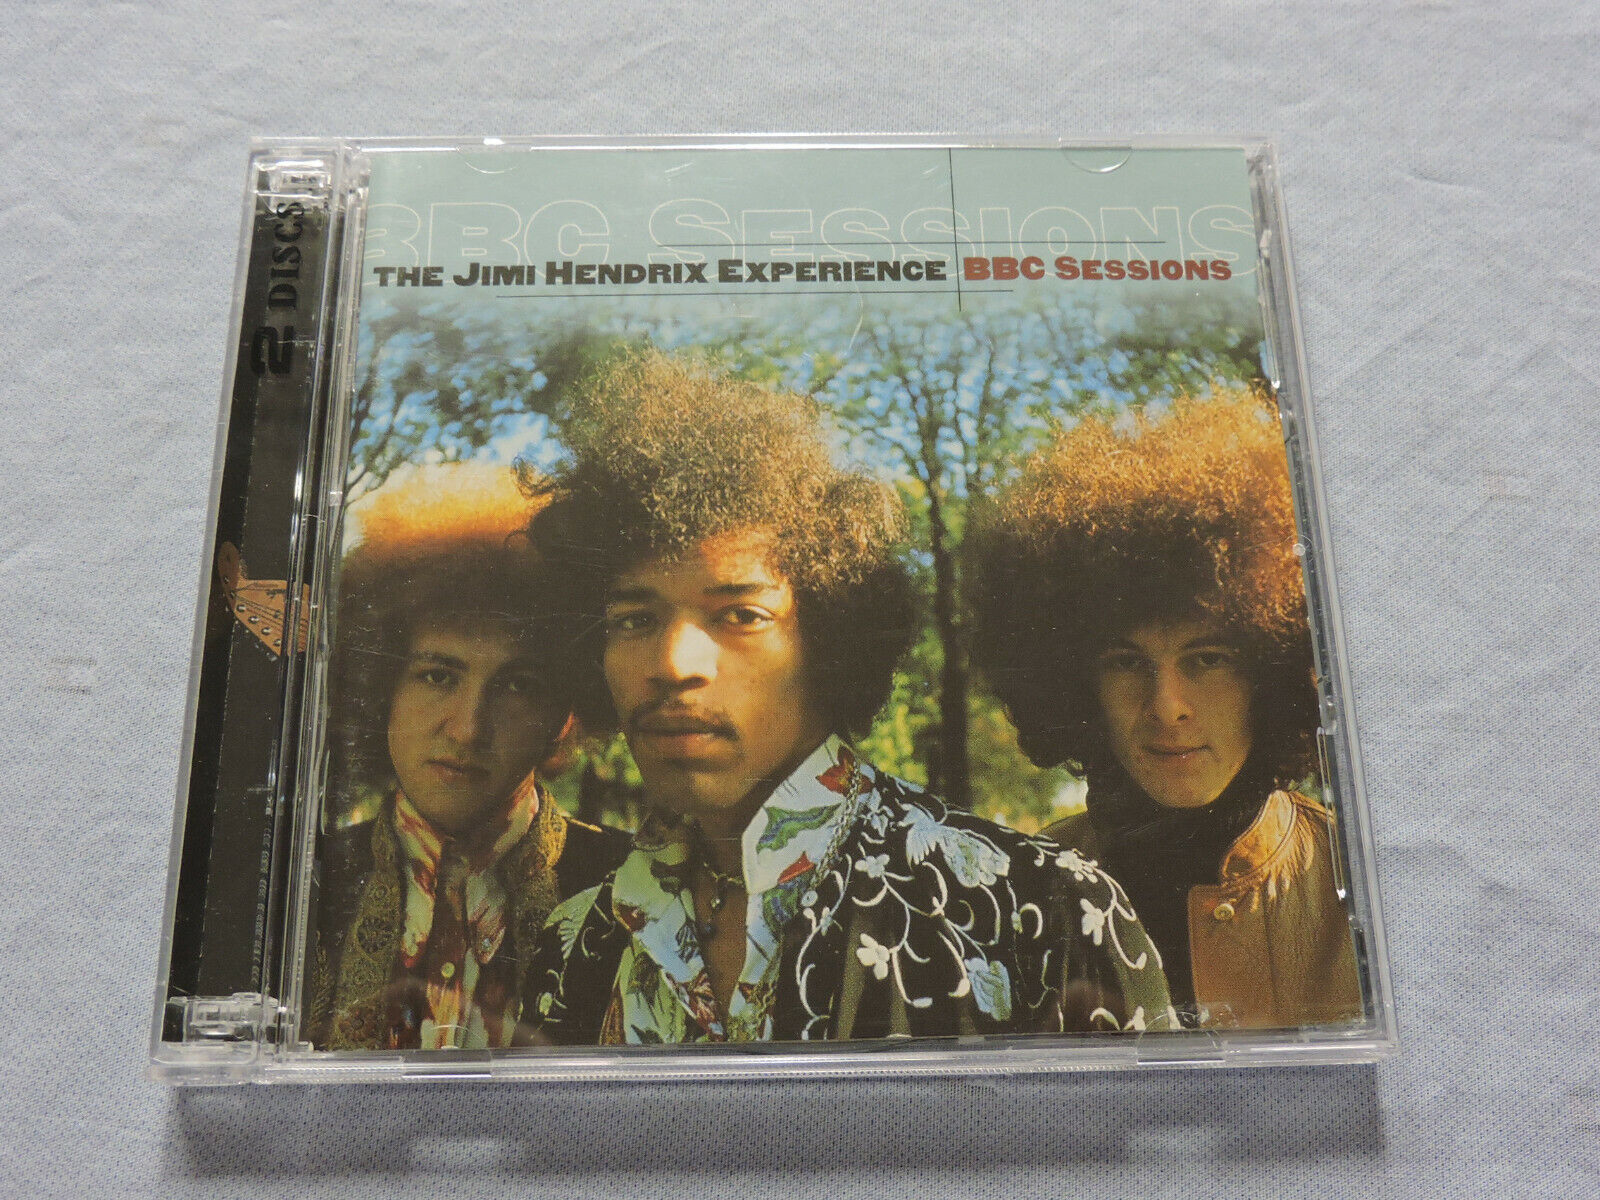 The Jimi Hendrix Experience: BBC Sessions by Jimi Hendrix 2 CD Set